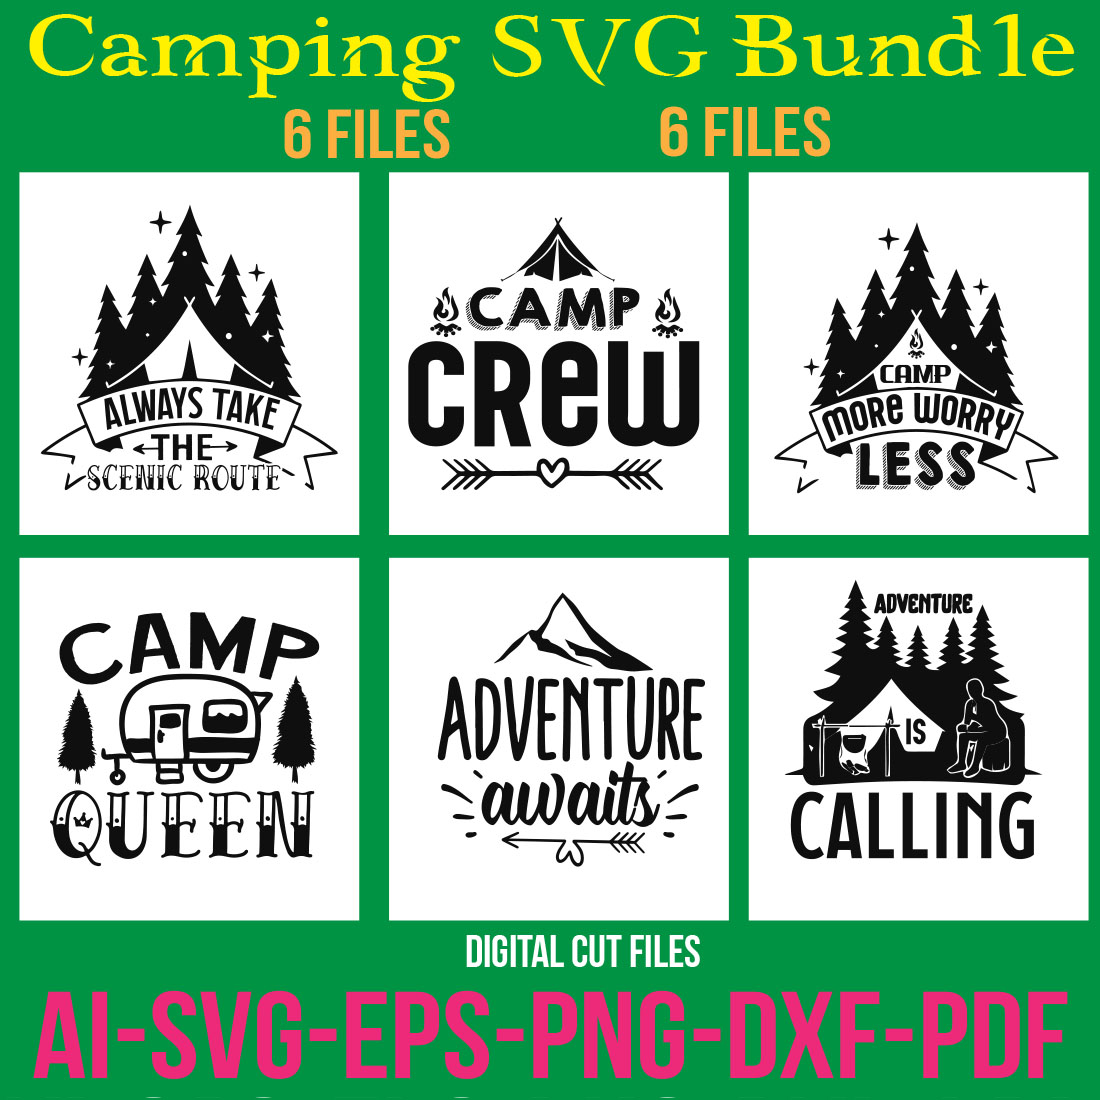 Camping SVG Bundle cover image.